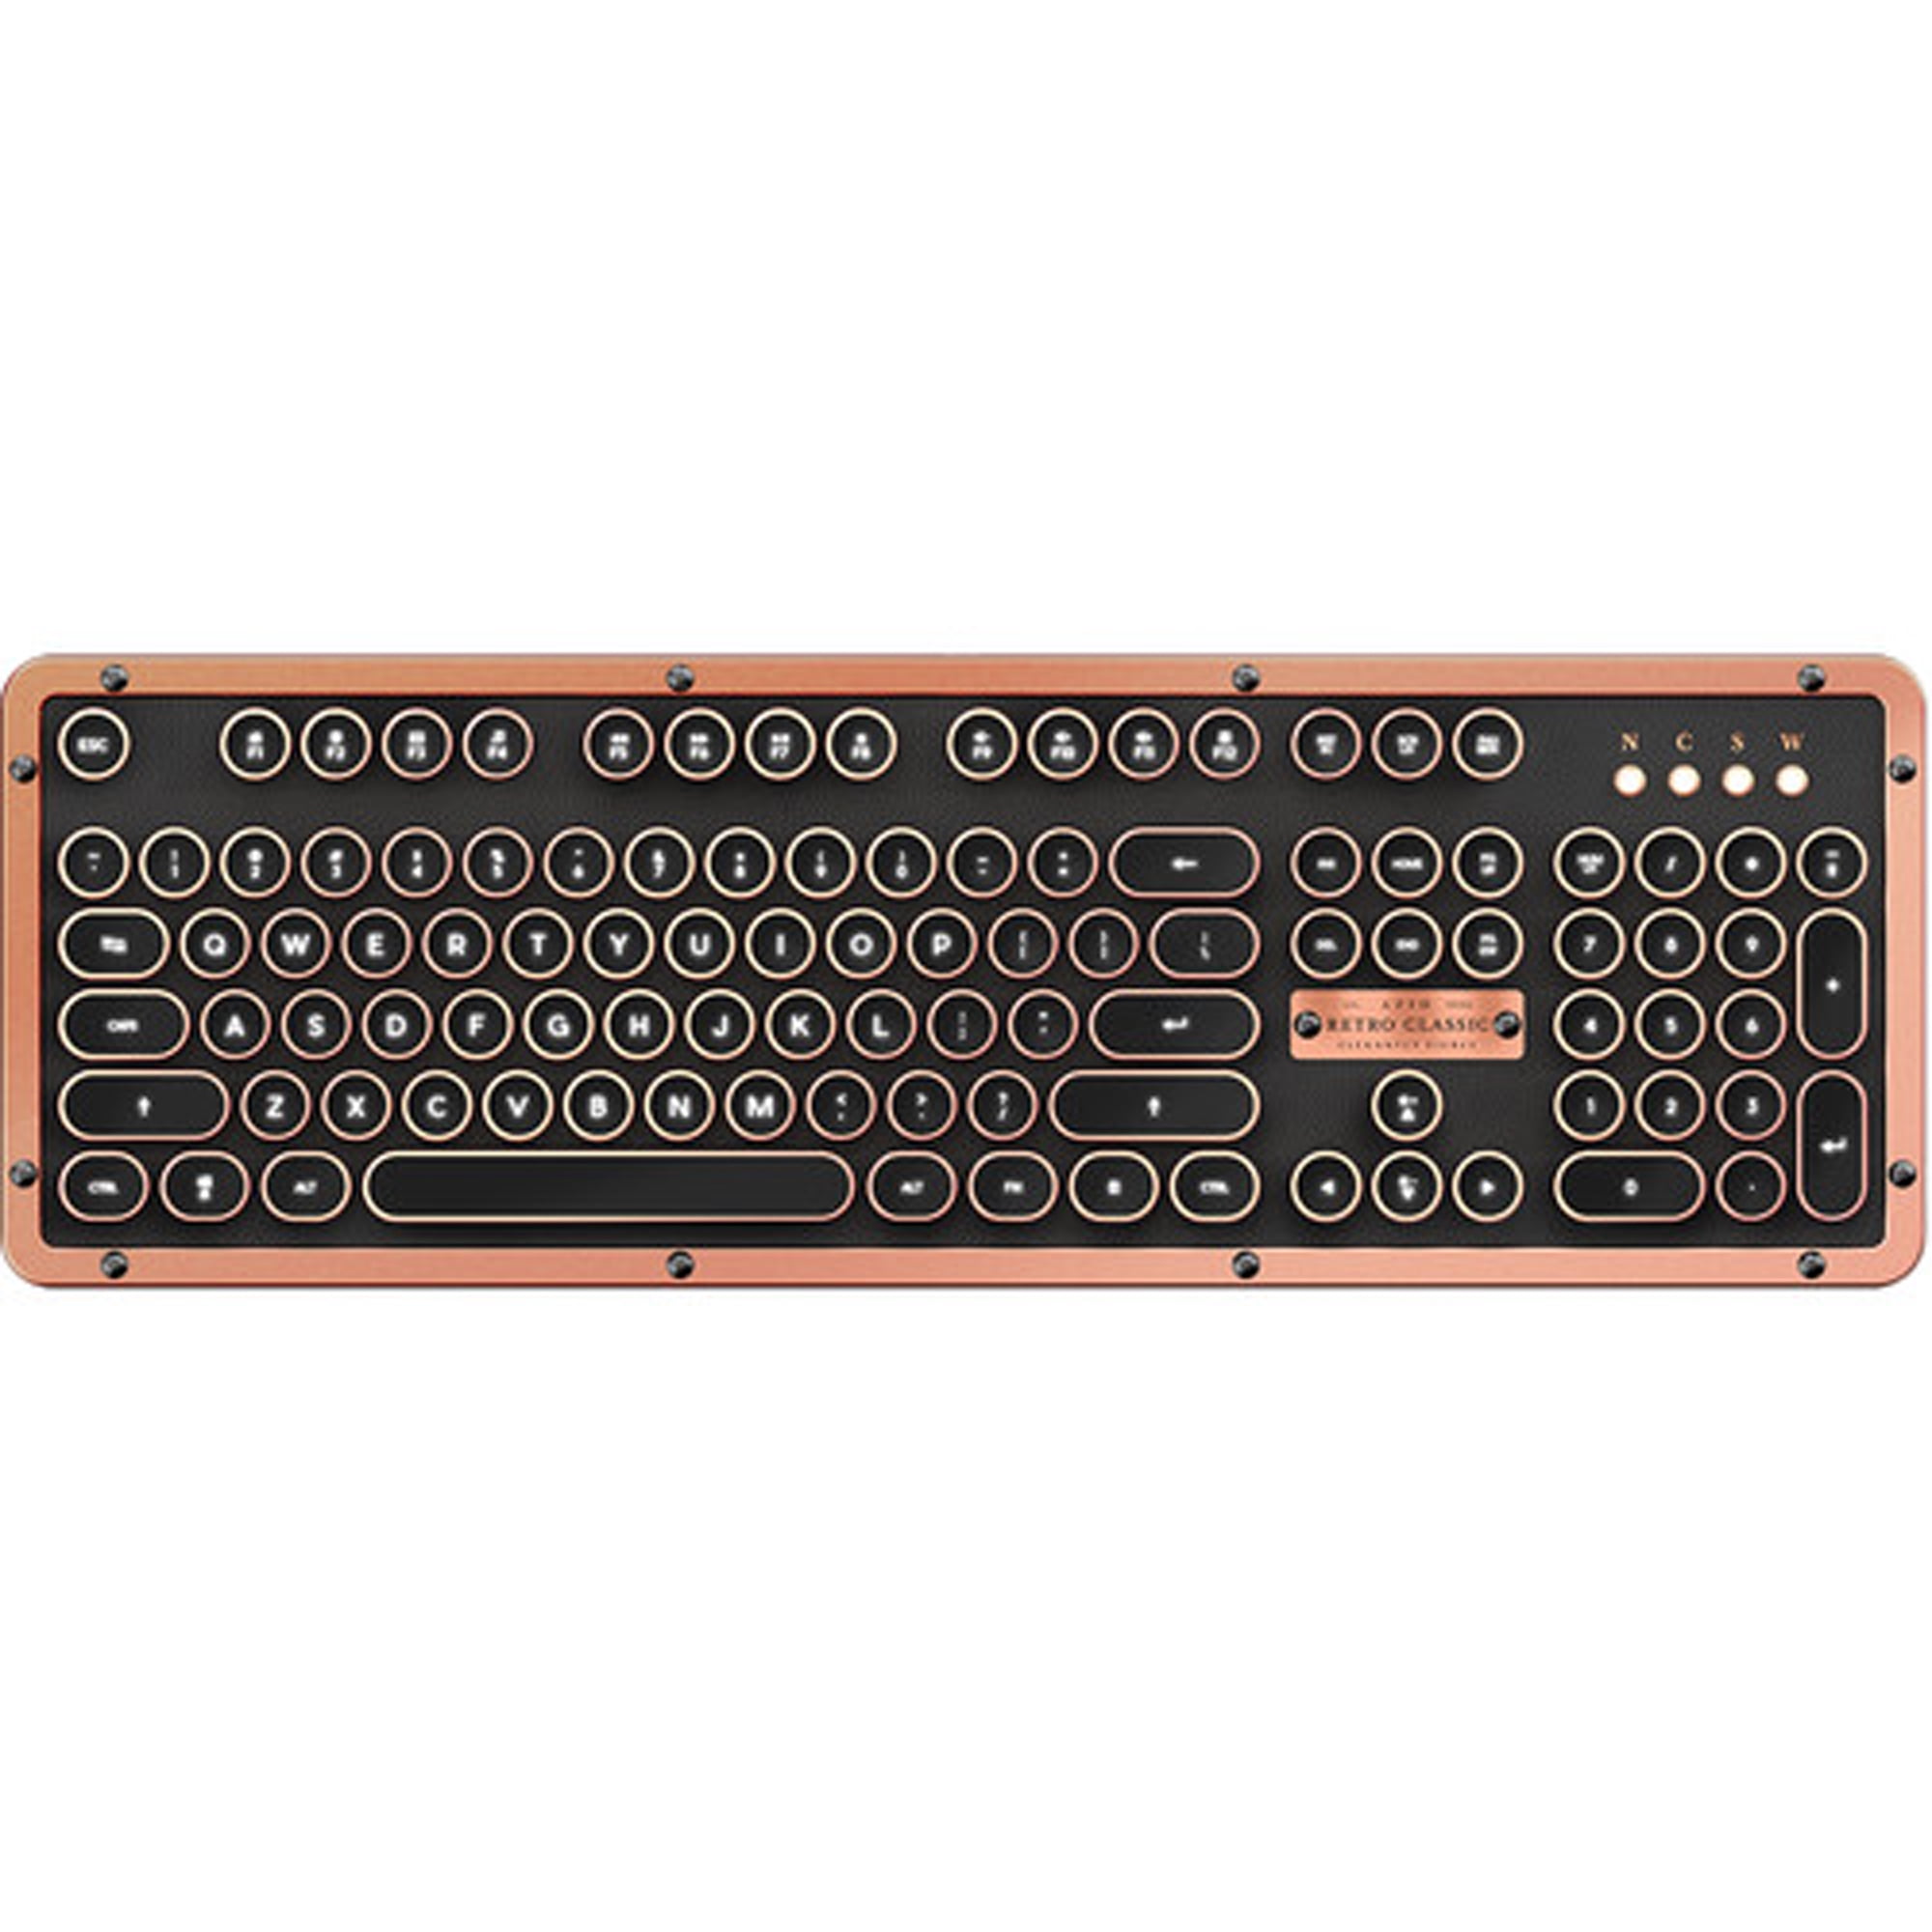 Azio Retro Classic BT Wireless Backlit Mechanical Keyboard (Artisan)